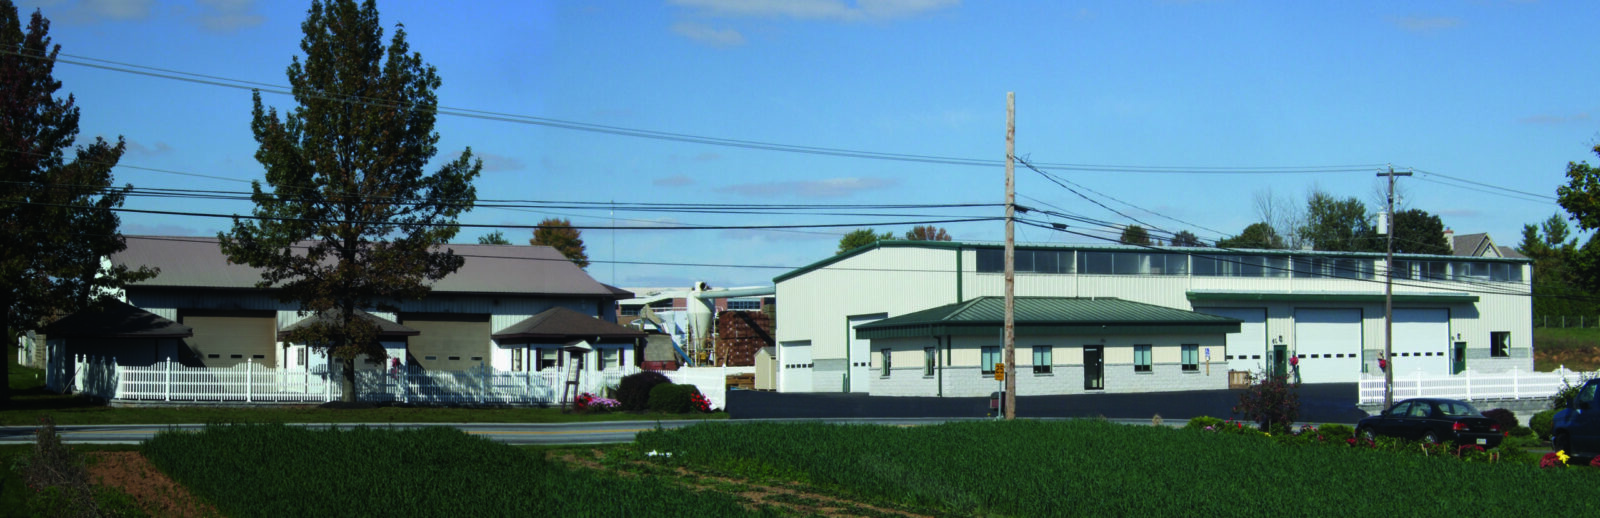 location of amish pavilions manufacturer